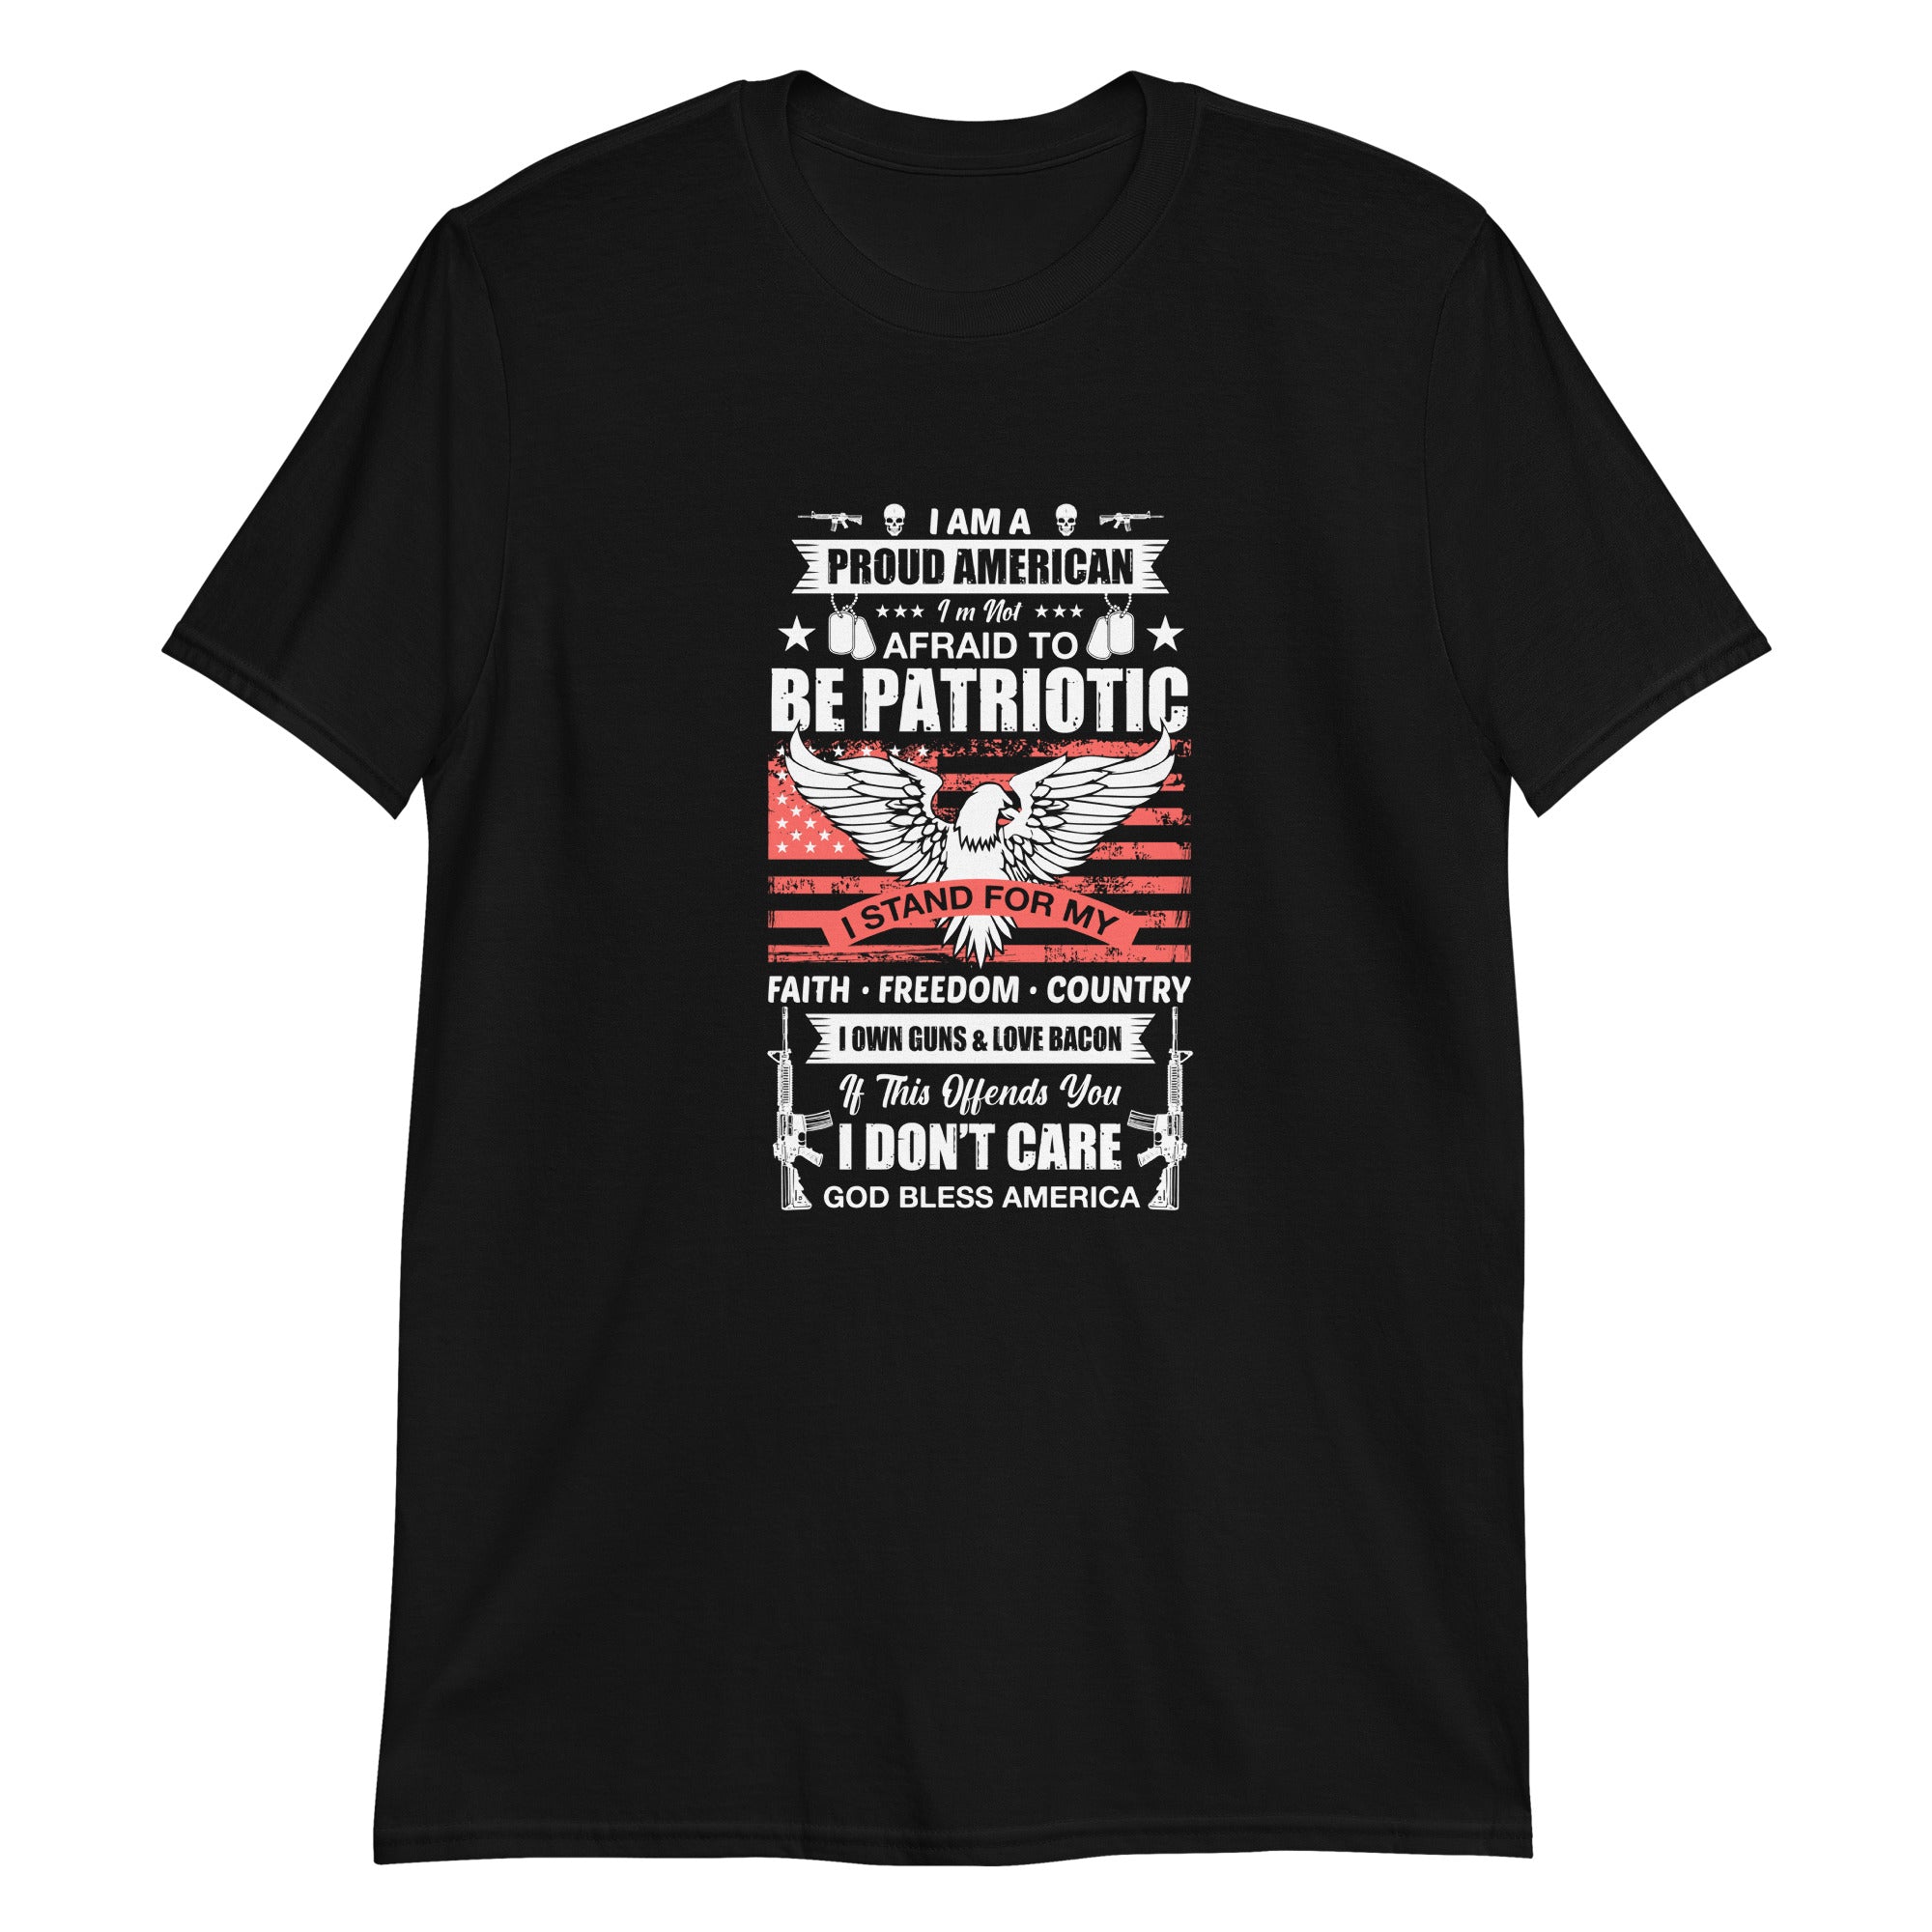 Not Afraid to be Patriotic Short-Sleeve Unisex T-Shirt